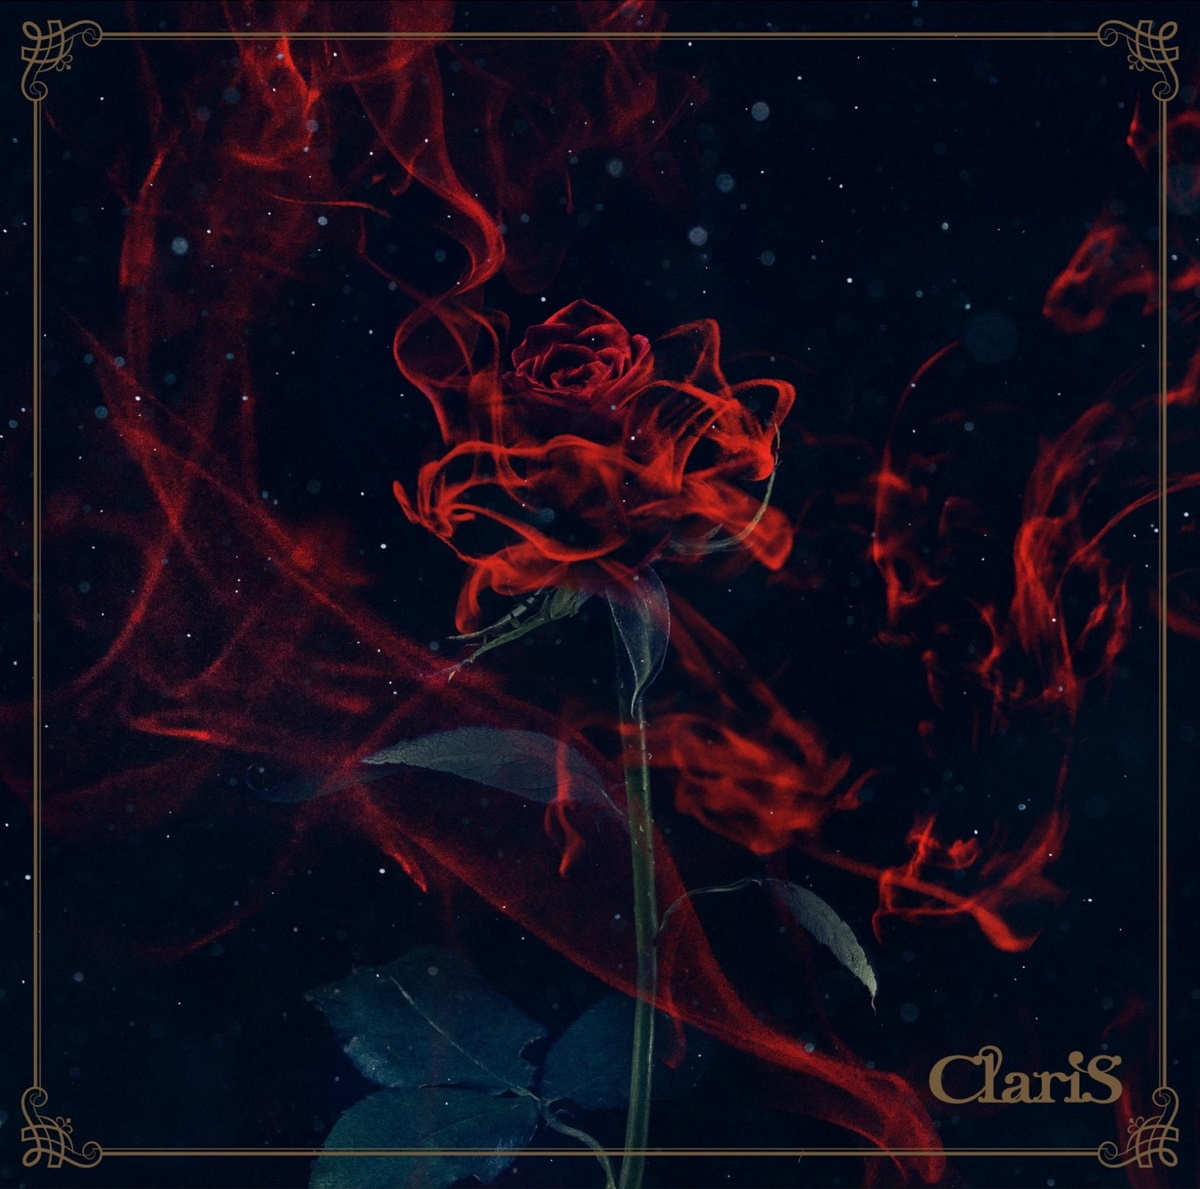 Cover art for『ClariS - Masquerade』from the release『Masquerade』